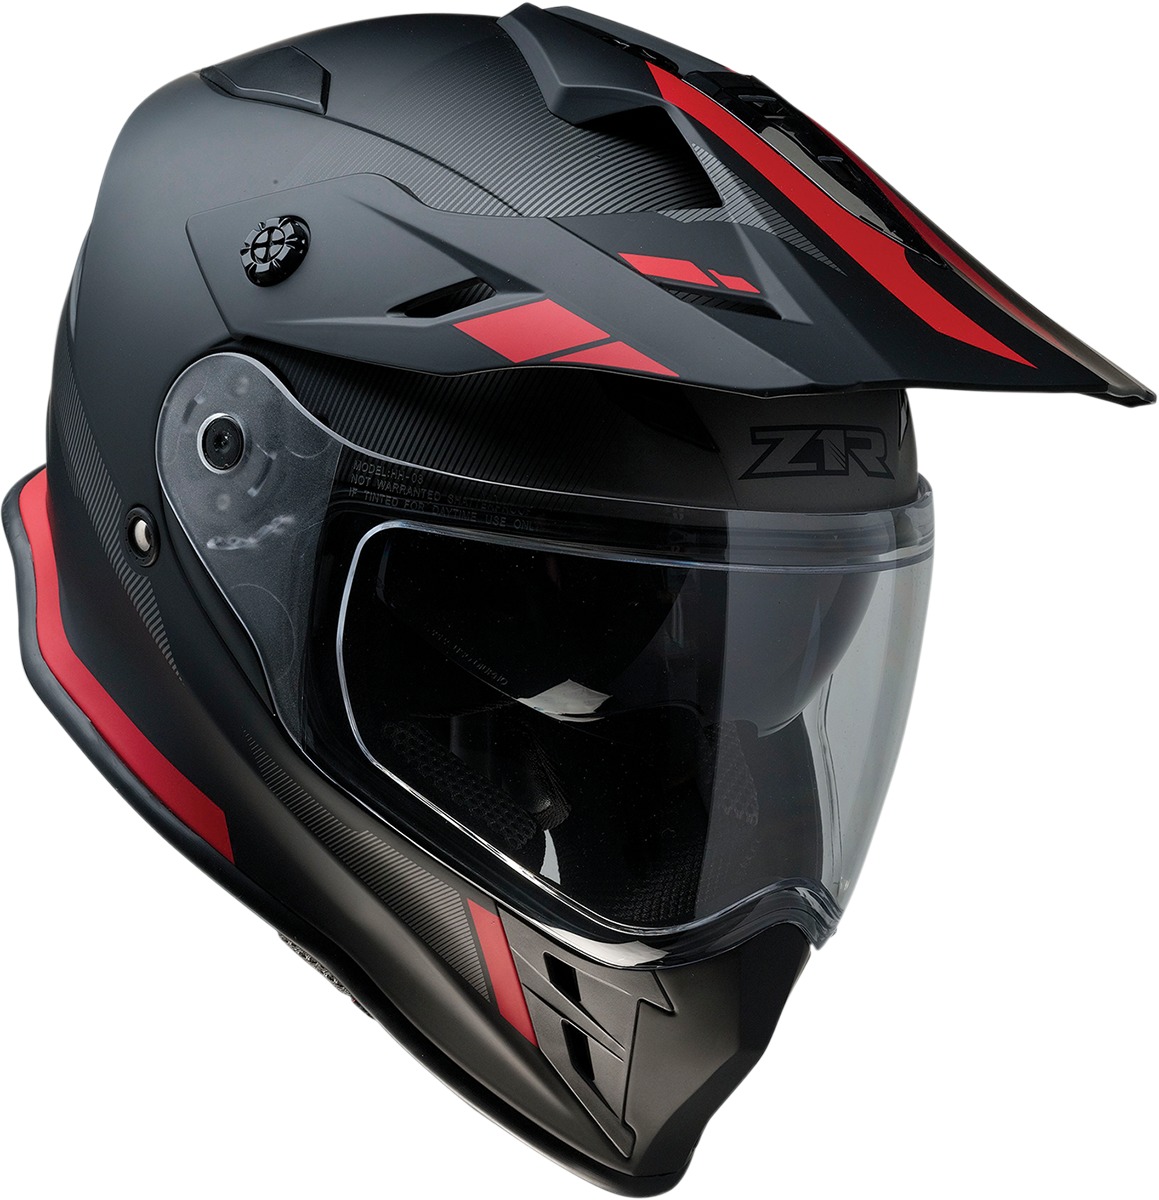 Range Dual Sport Helmet Small - Uptake Black/Red - Click Image to Close